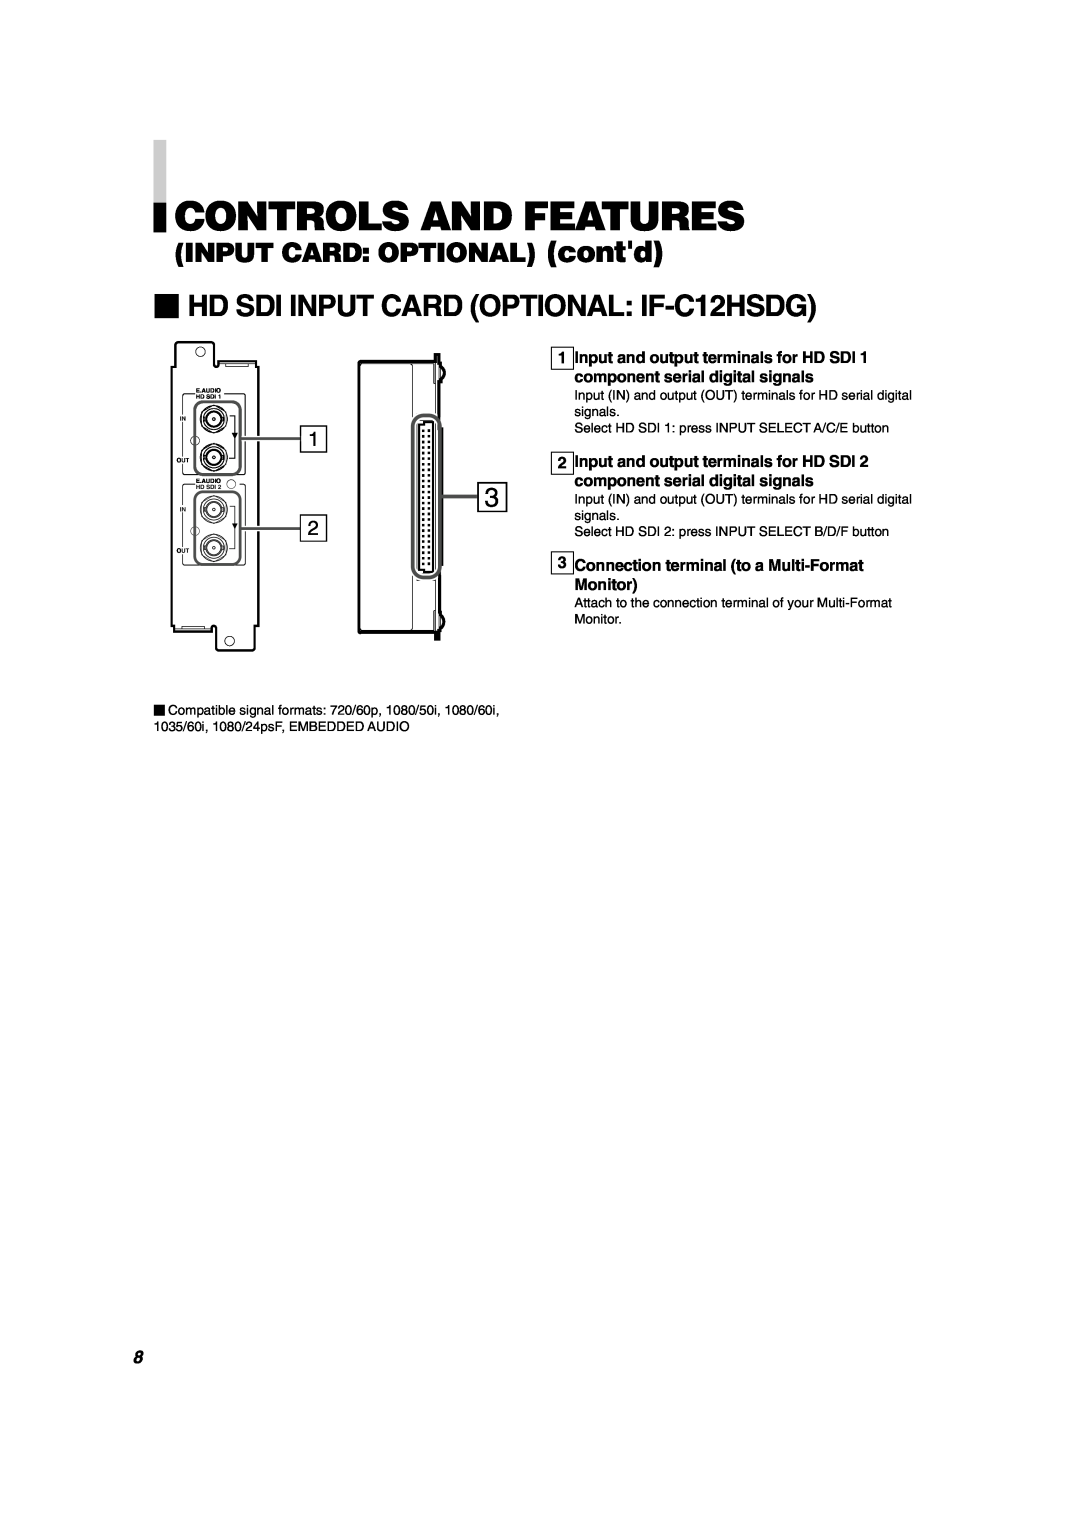 JVC DT-V1900CG manual  HD SDI INPUT CARD OPTIONAL IF-C12HSDG, INPUT CARD OPTIONAL contd, Controls And Features 